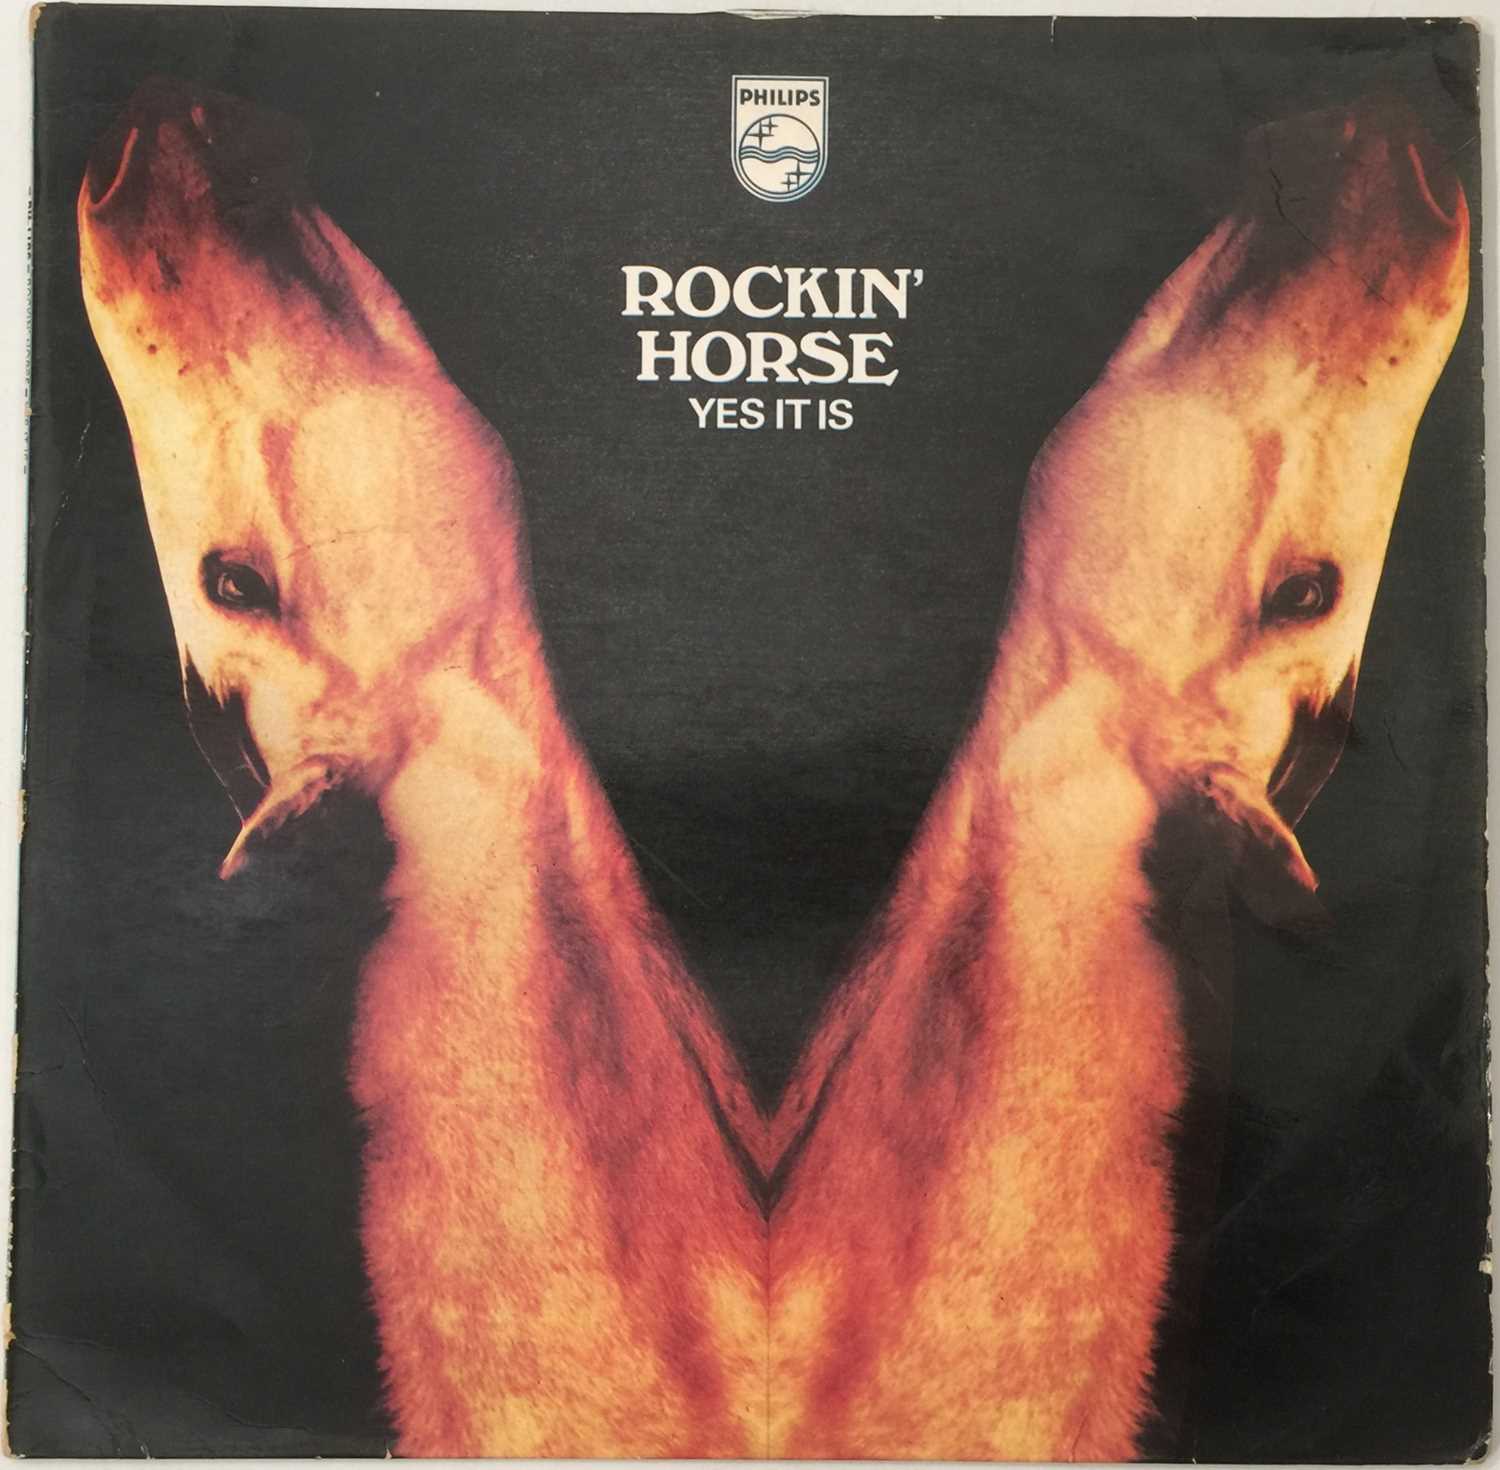 ROCKIN' HORSE - YES IT IS LP (ORIGINAL UK WHITE LABEL TEST PRESSING - PHILIPS 6308 075) - Image 2 of 5